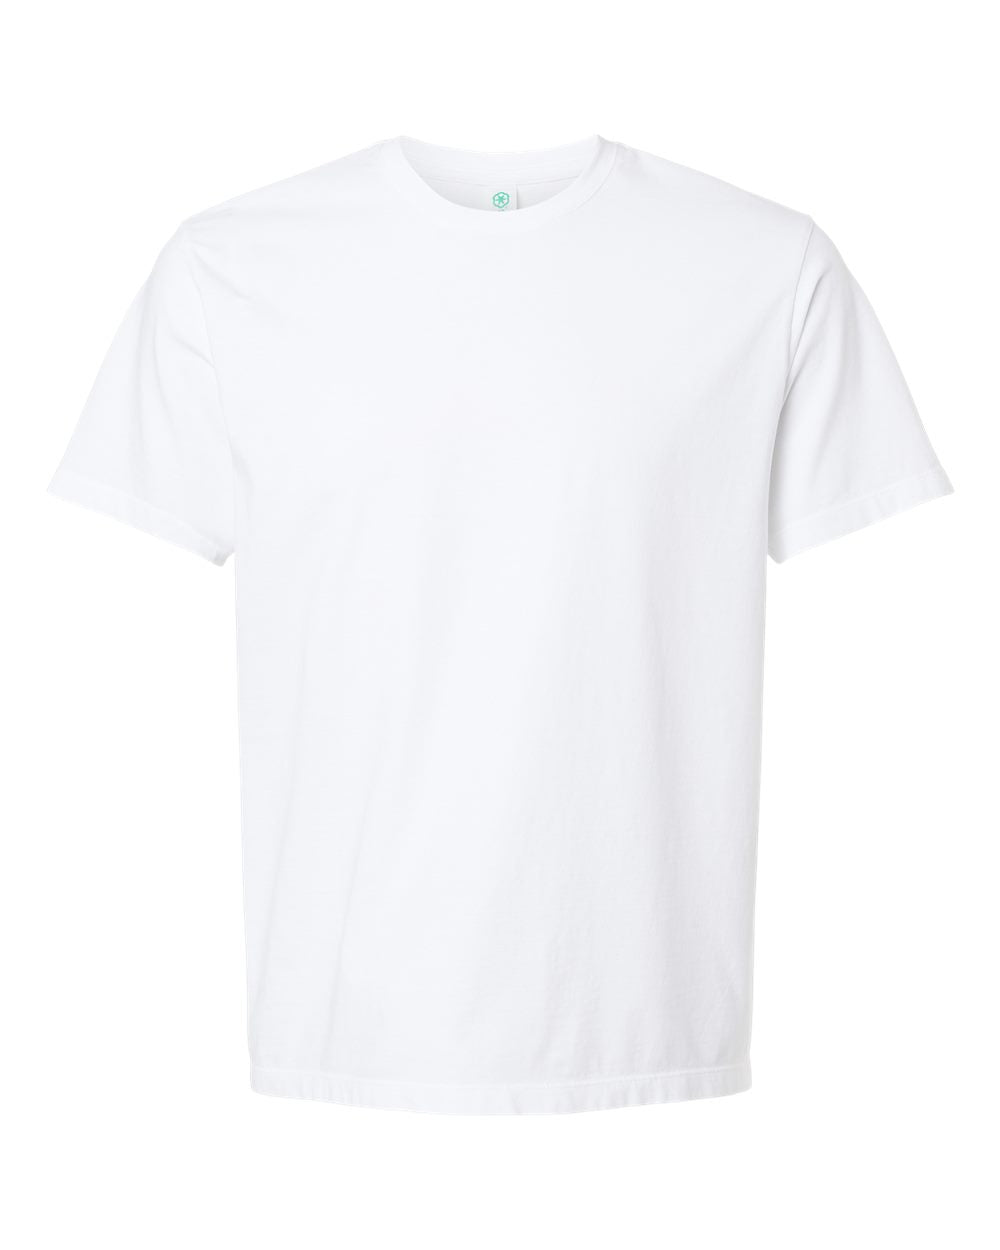 Softshirts® Unisex Organic Cotton T-shirt in white